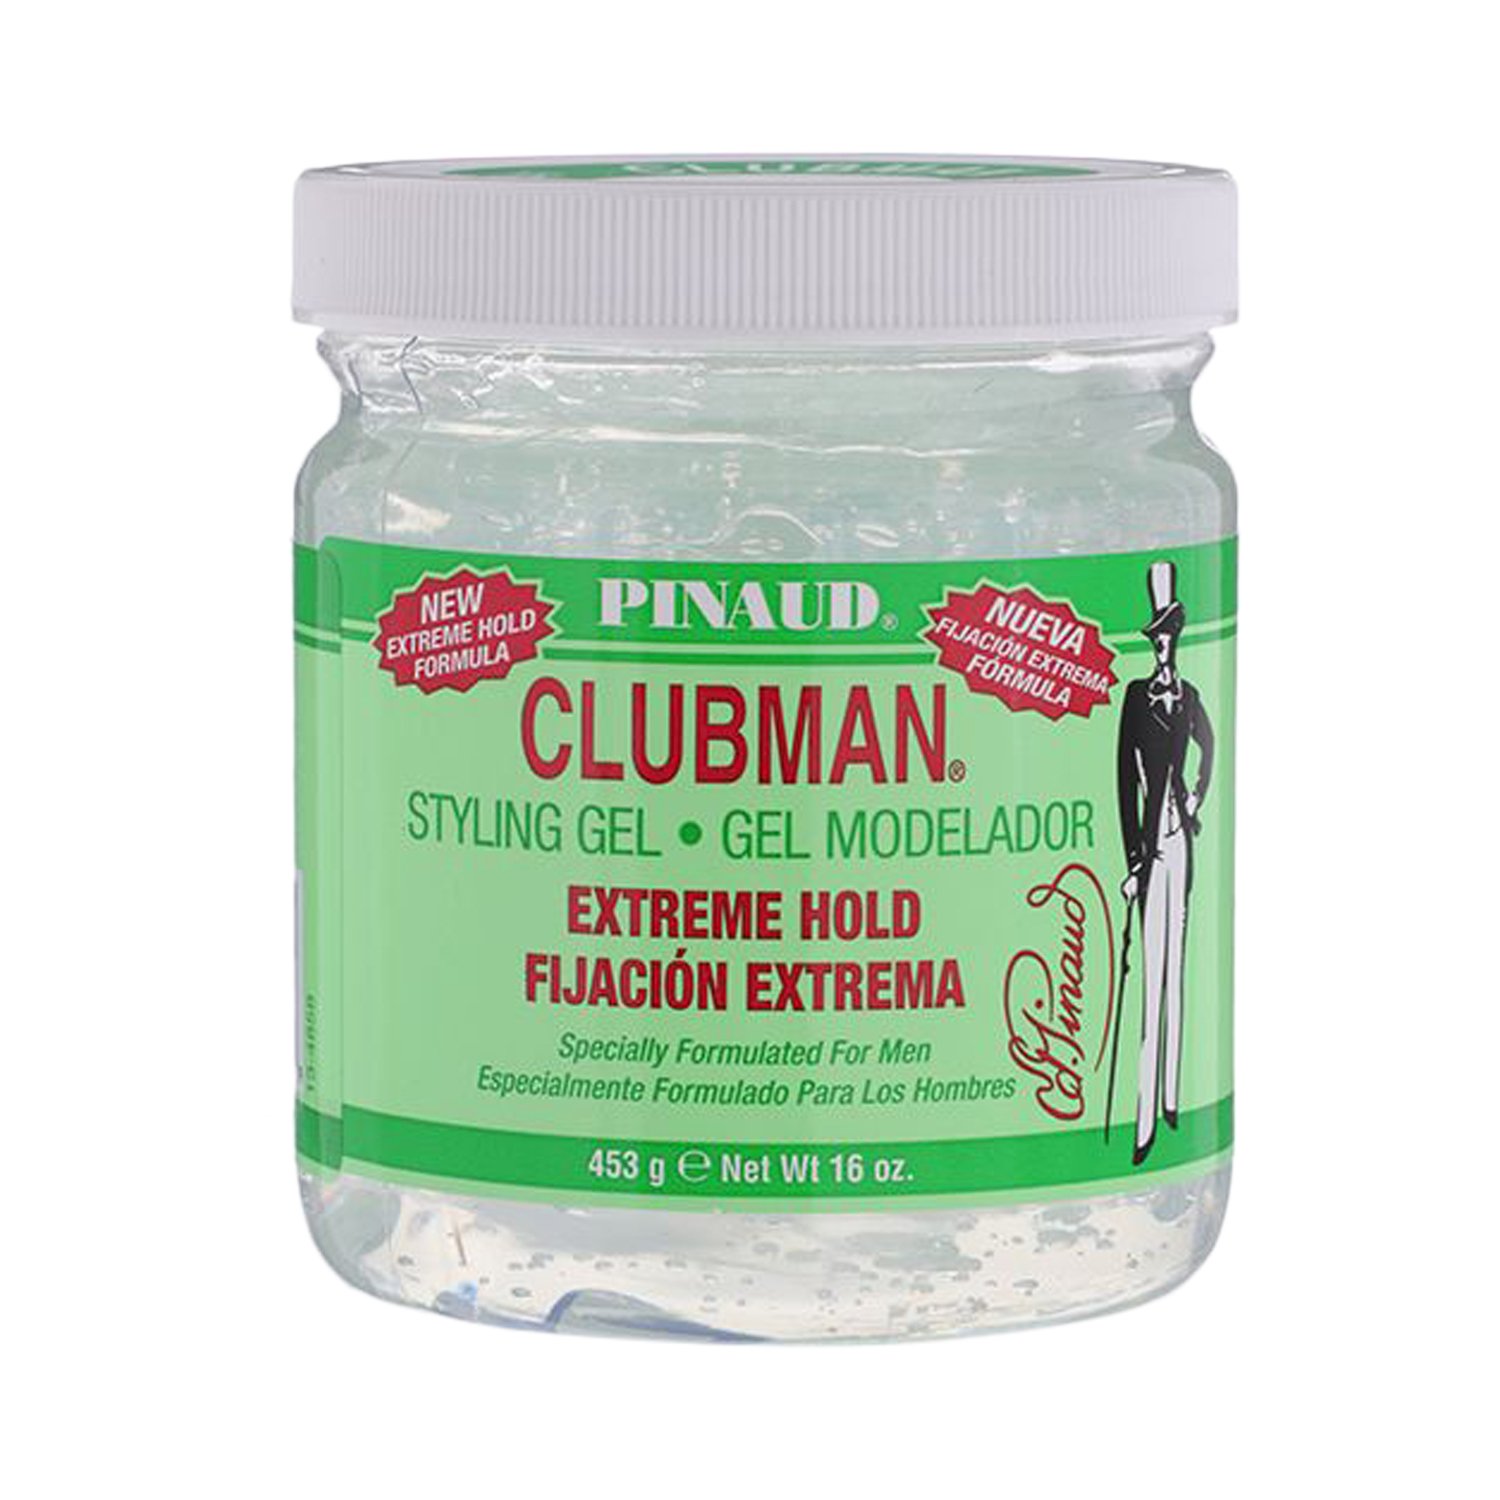 Clubman Pinaud - Extreme Hold Styling Gel - Gel mit maximalem Halt